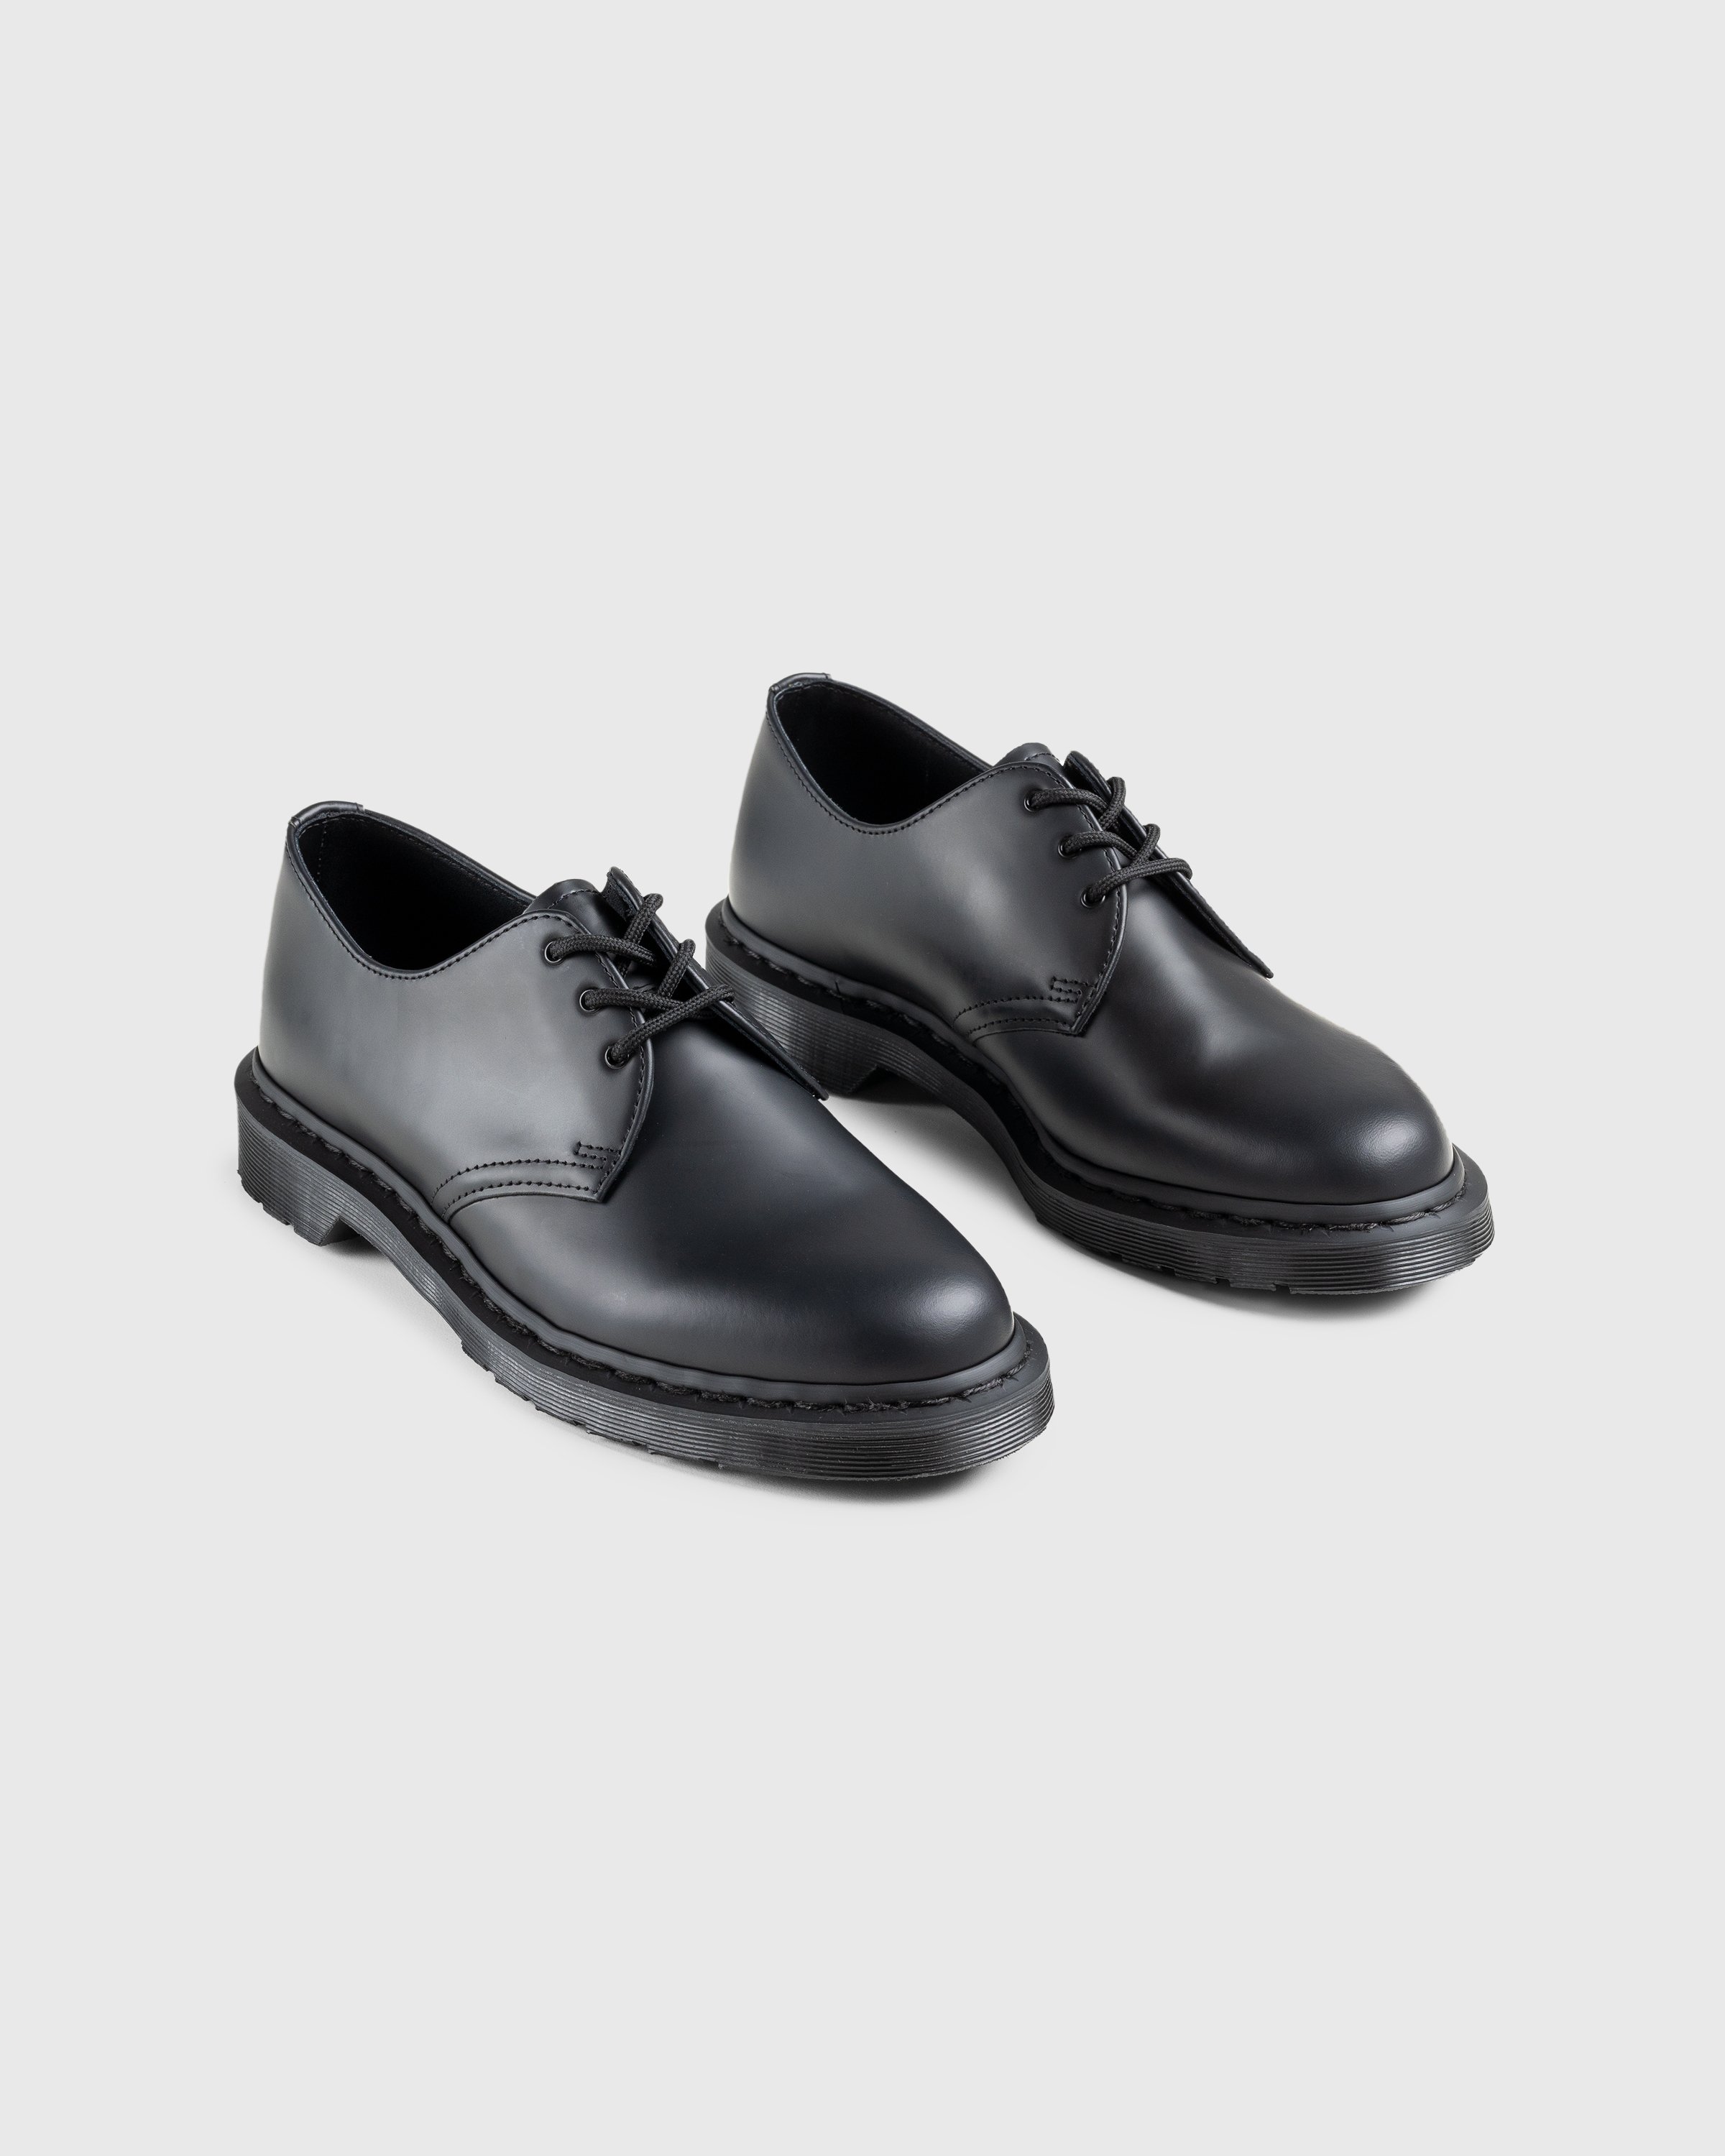 Dr. Martens - 1461 Mono Black Smooth - Footwear - Black - Image 3